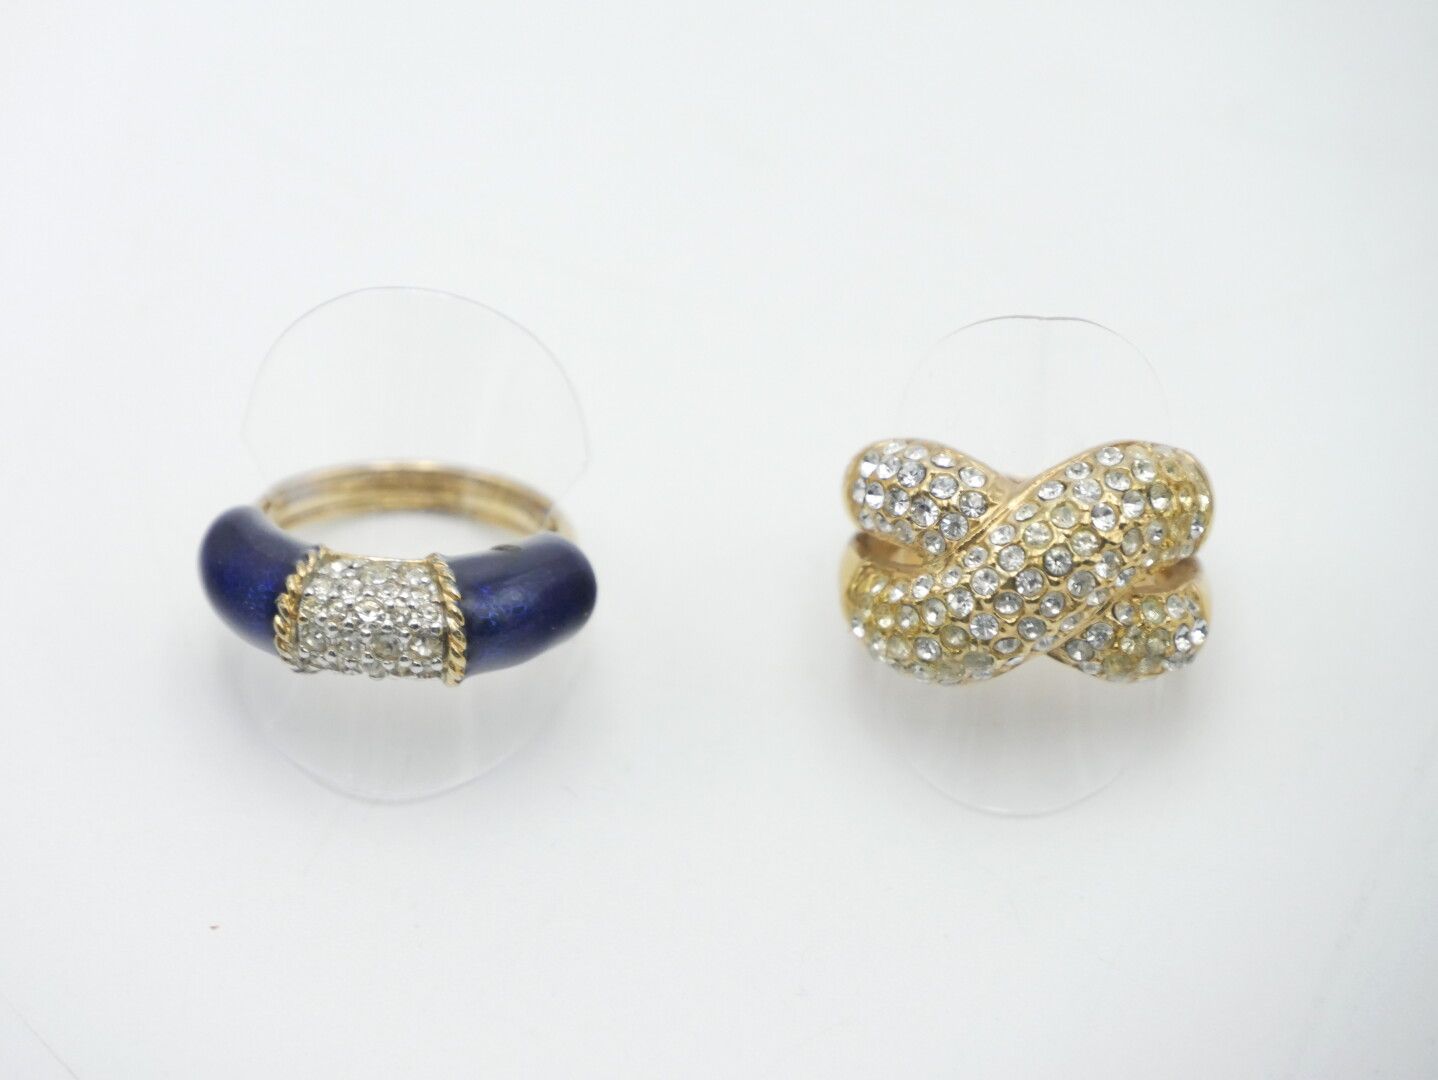 Null 古老的

一组镀金金属和水钻的戒指：一个有交错装饰，另一个有蓝色珐琅装饰

为第二个人打铃

手指大小：51和49

轻微的磨损和撕裂